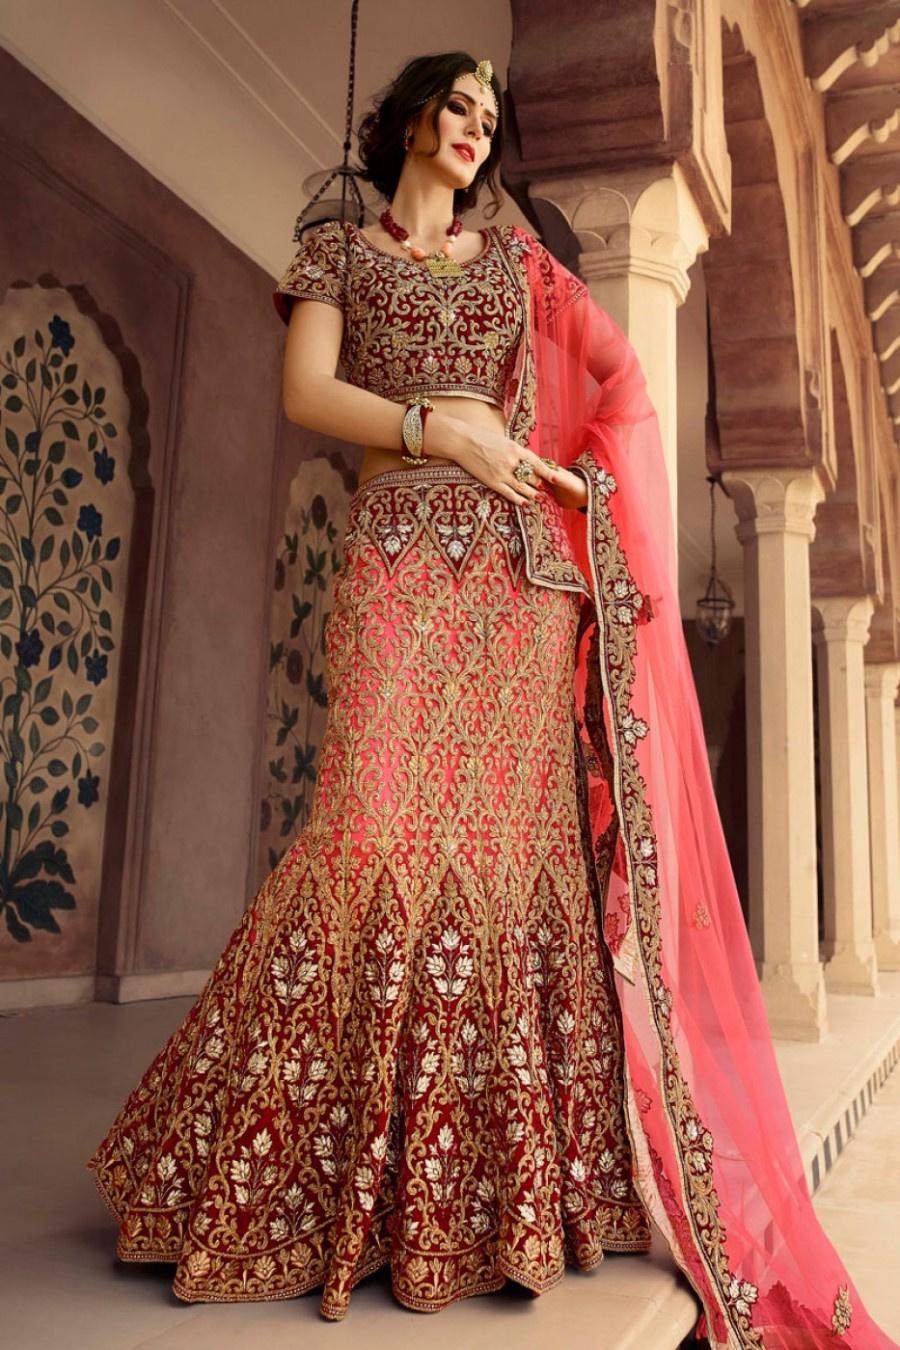 Gold brocade bridal Lehenga with traditional embroidery | Indian outfits,  Indian bridal lehenga, Indian wedding dress